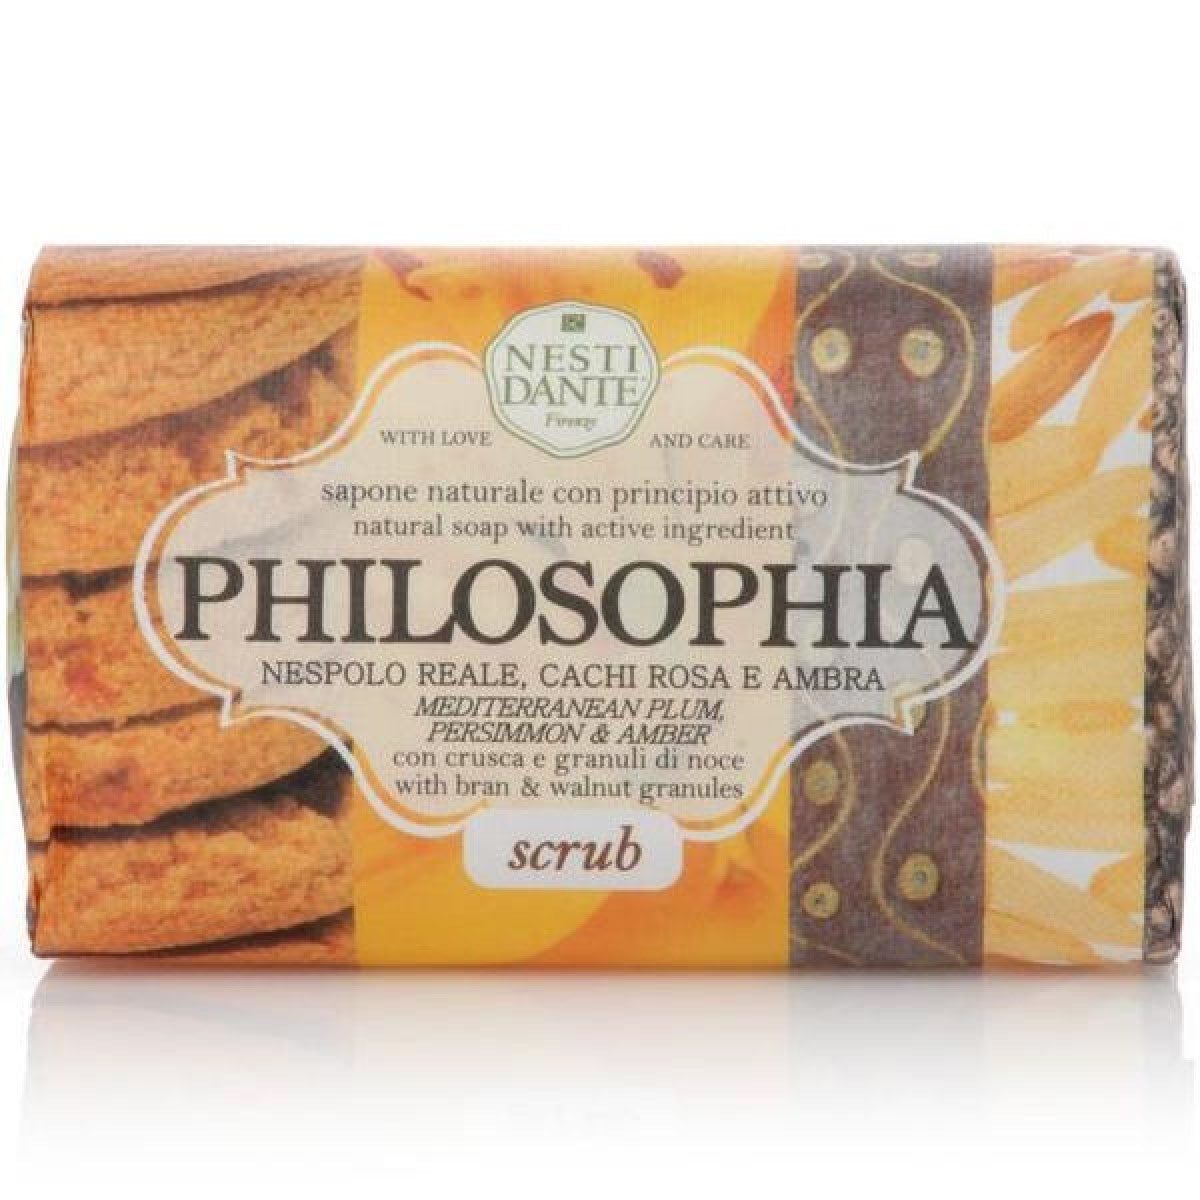 Primary Image of Philosophia Scrub Soap